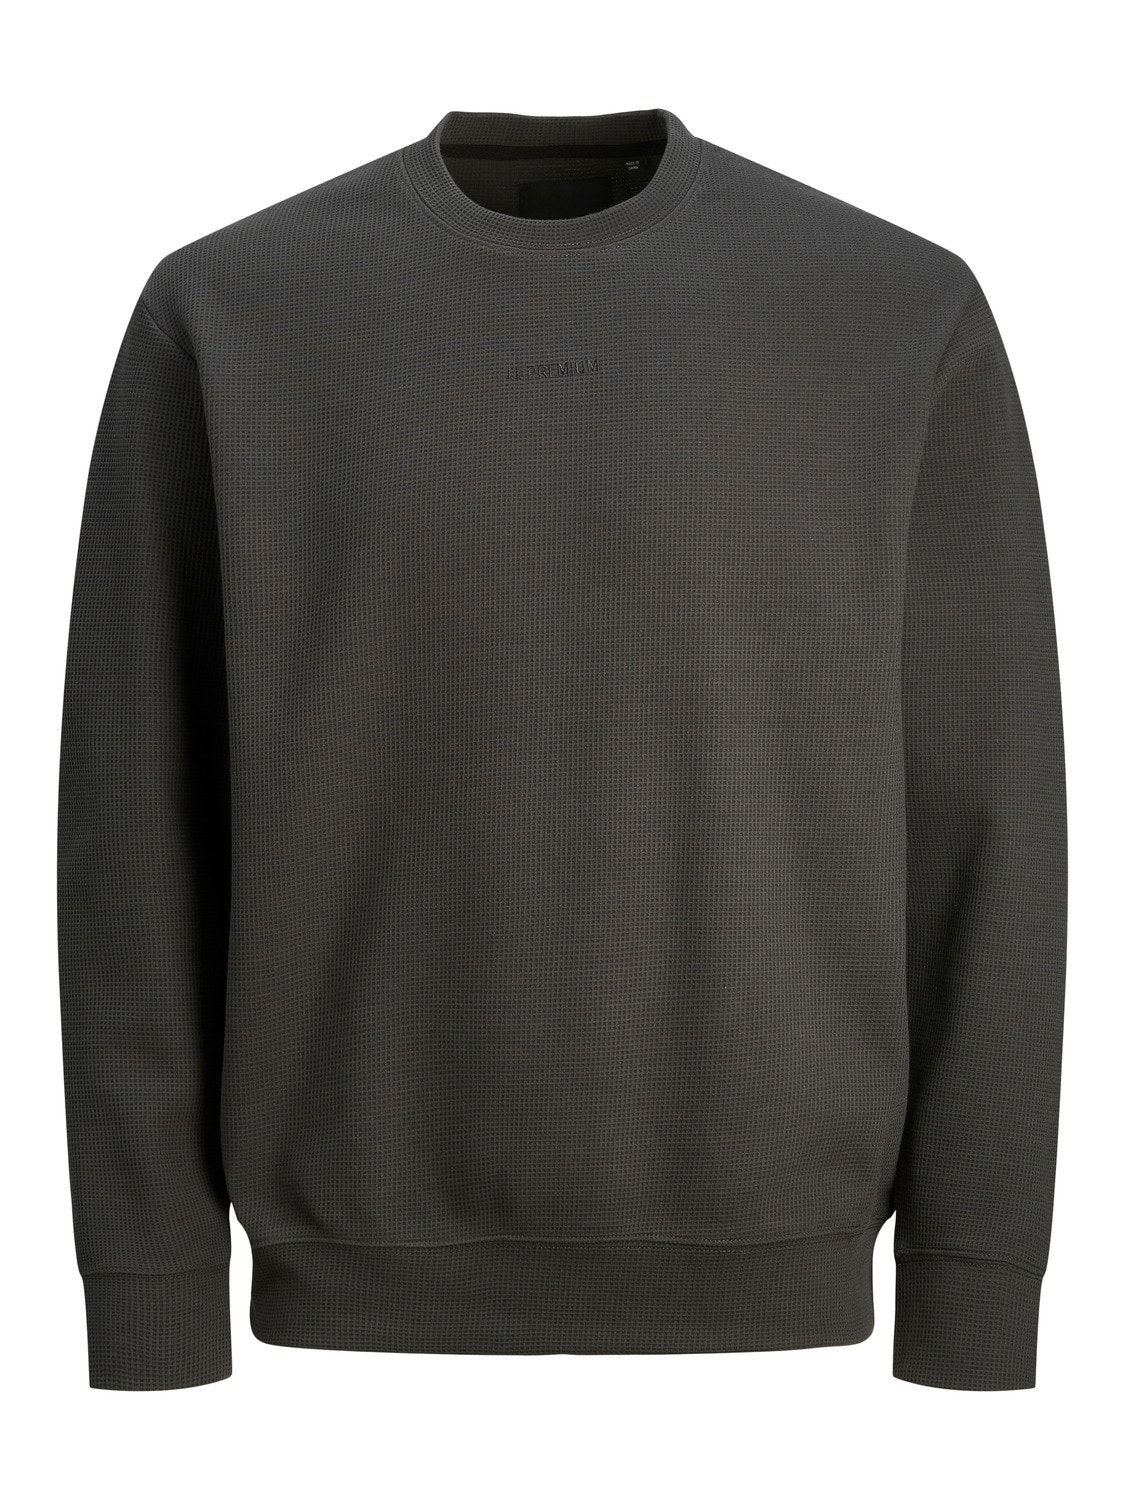 Jack & Jones Plain Crew neck Sweatshirt -Black Sand - 12241205